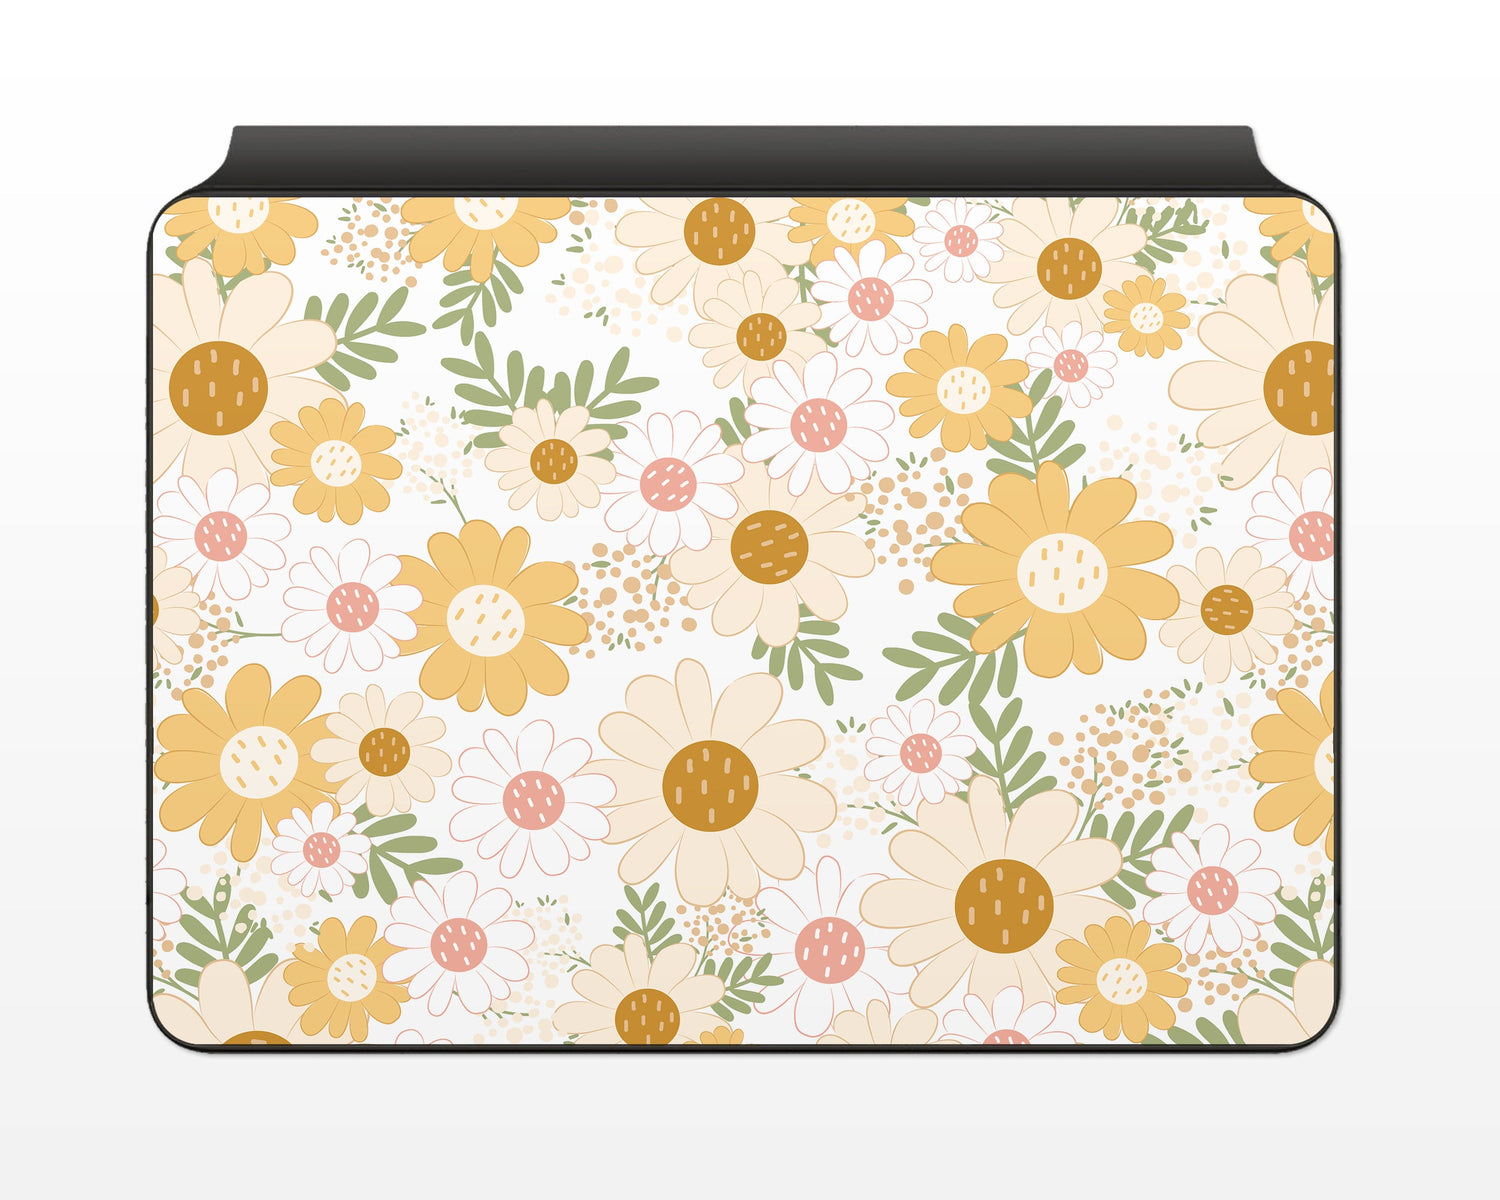 Lux Skins Magic Keyboard Sunshine Daisy Spring Floral iPad Air Skins - Art Floral Skin